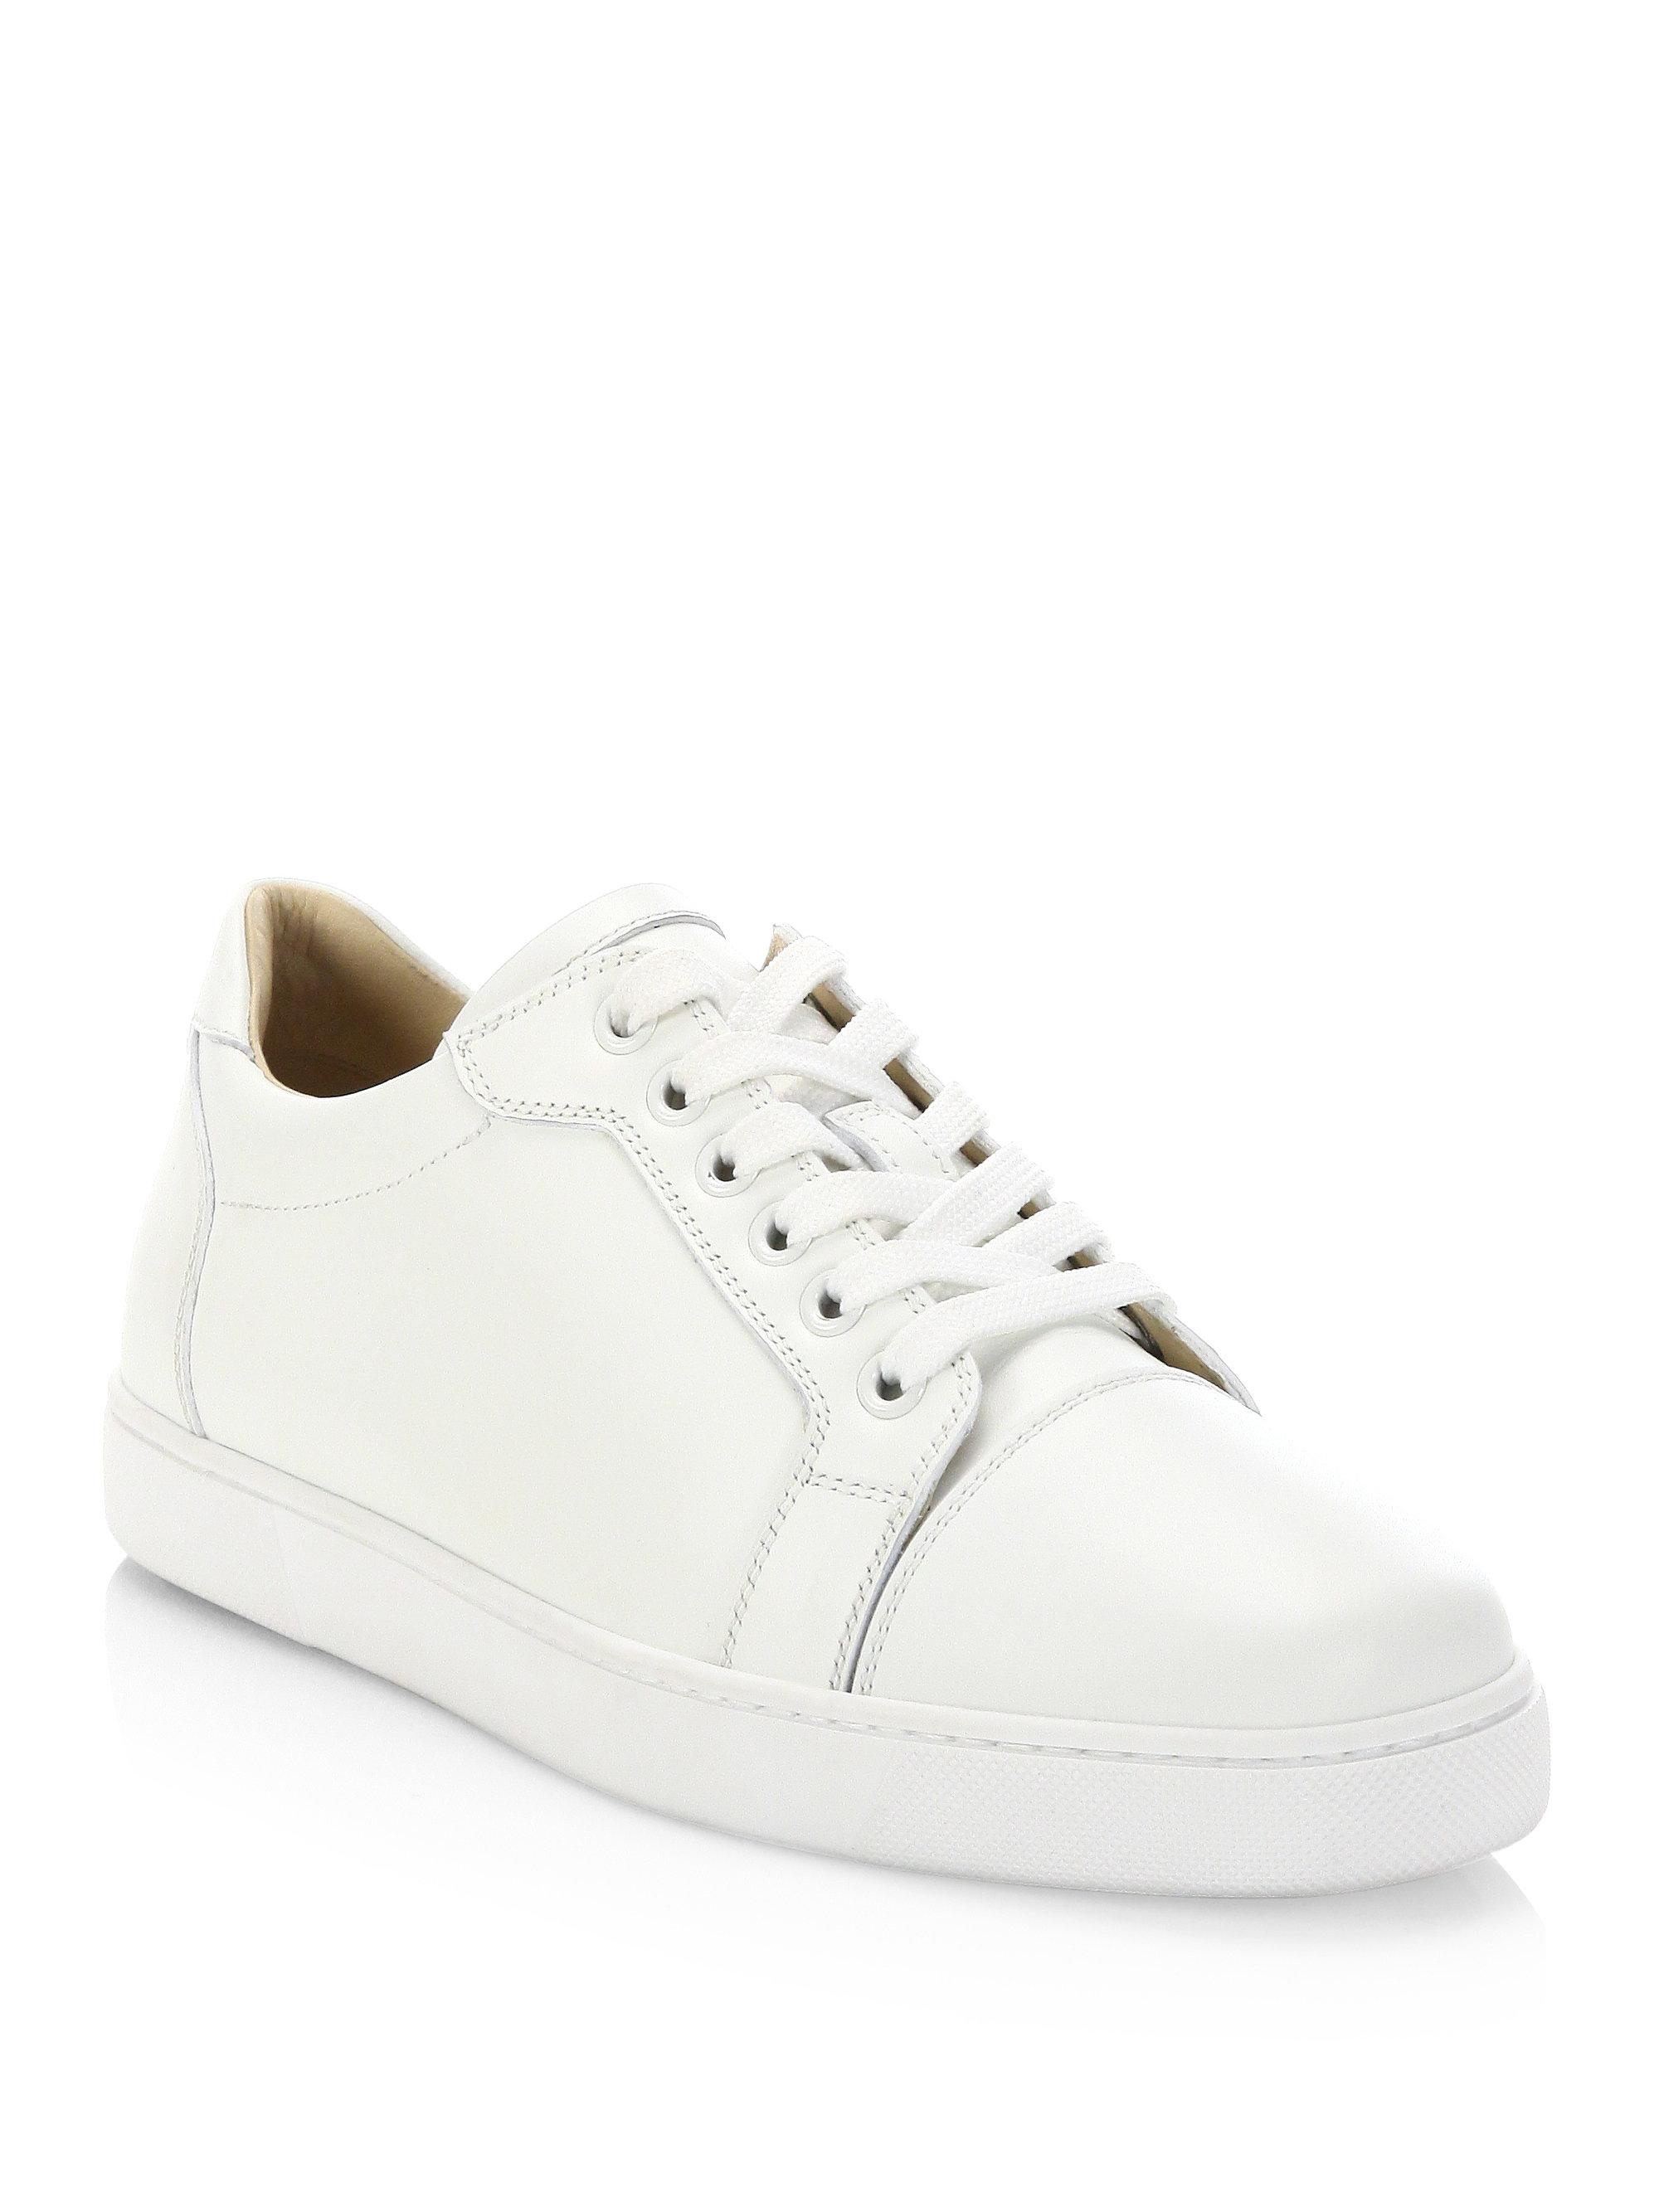 Christian Louboutin Vieira Leather Sneaker in White for Men - Lyst